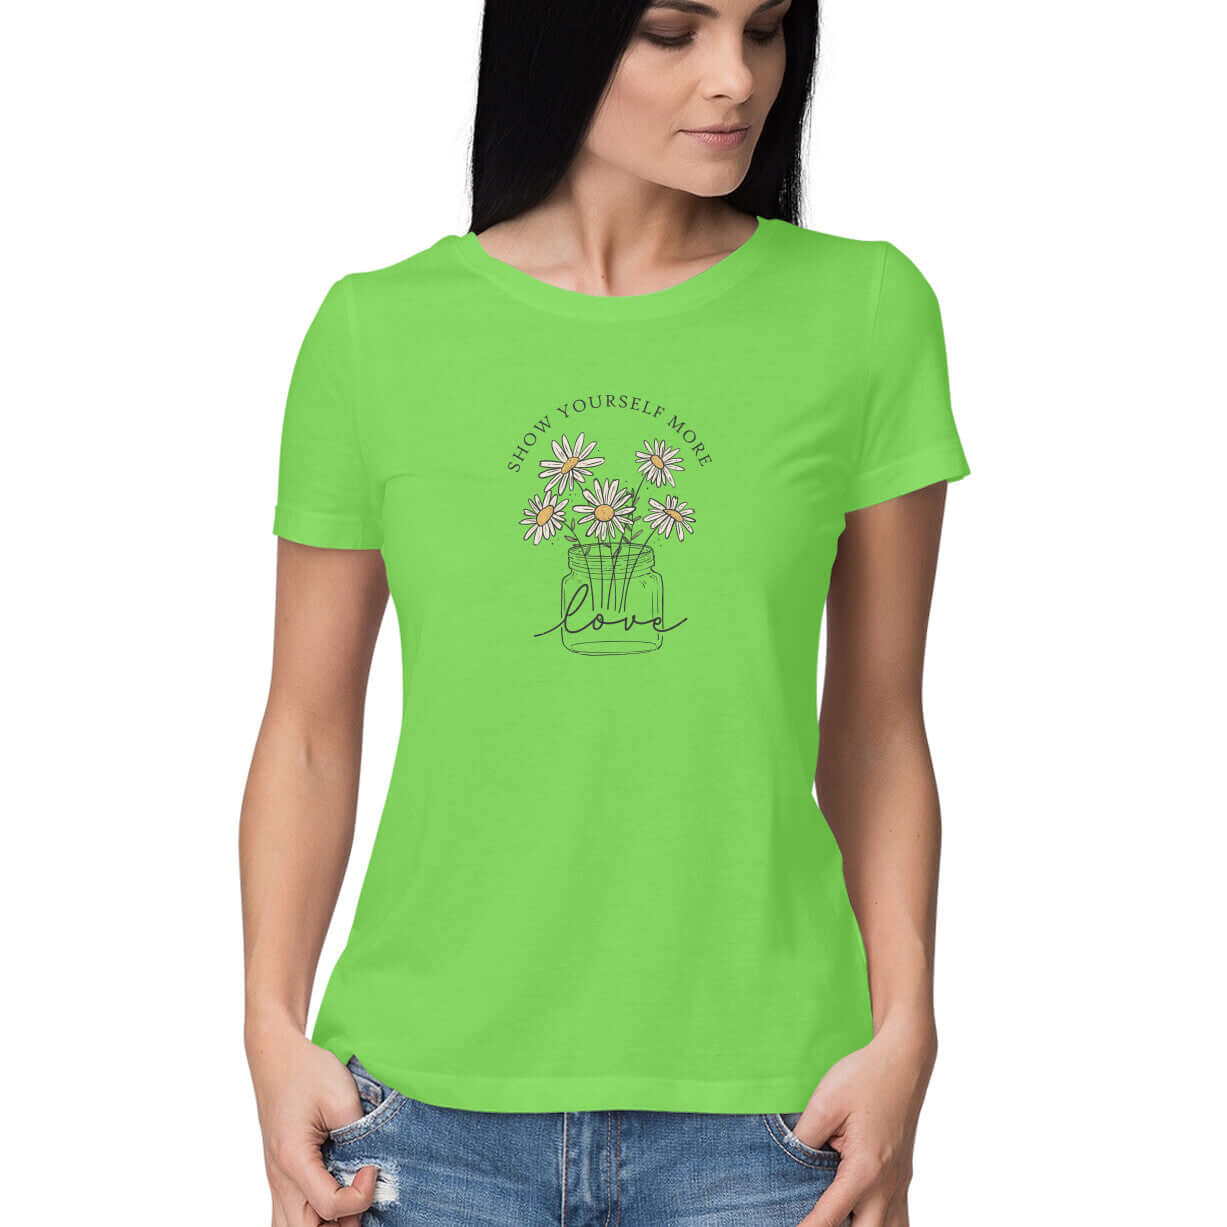 Show Yourself More Love | Women's T-Shirt - FairyBellsKart